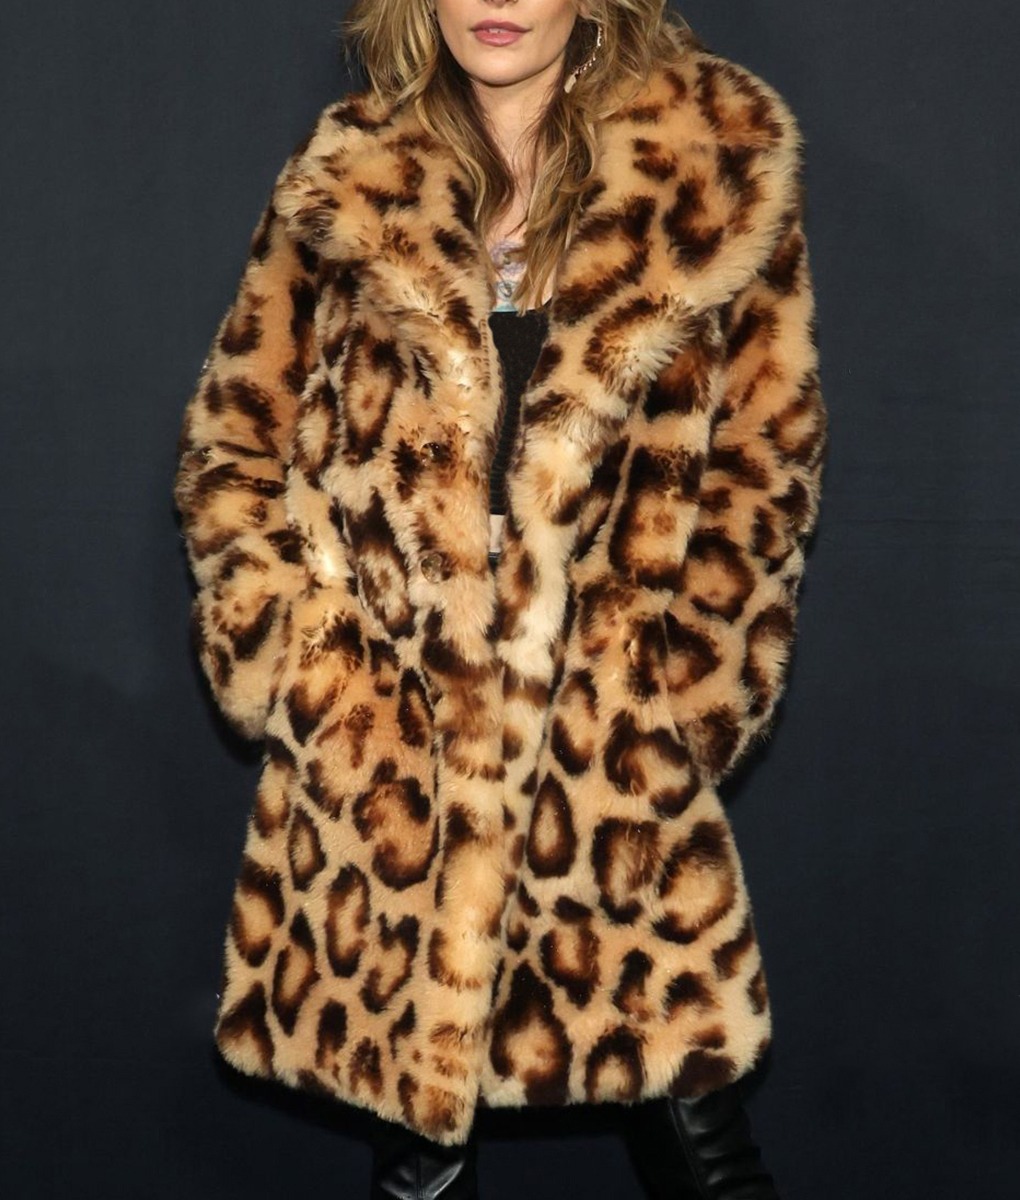 Paris Jackson Grammy Awards Leopard Fur Coat (1)